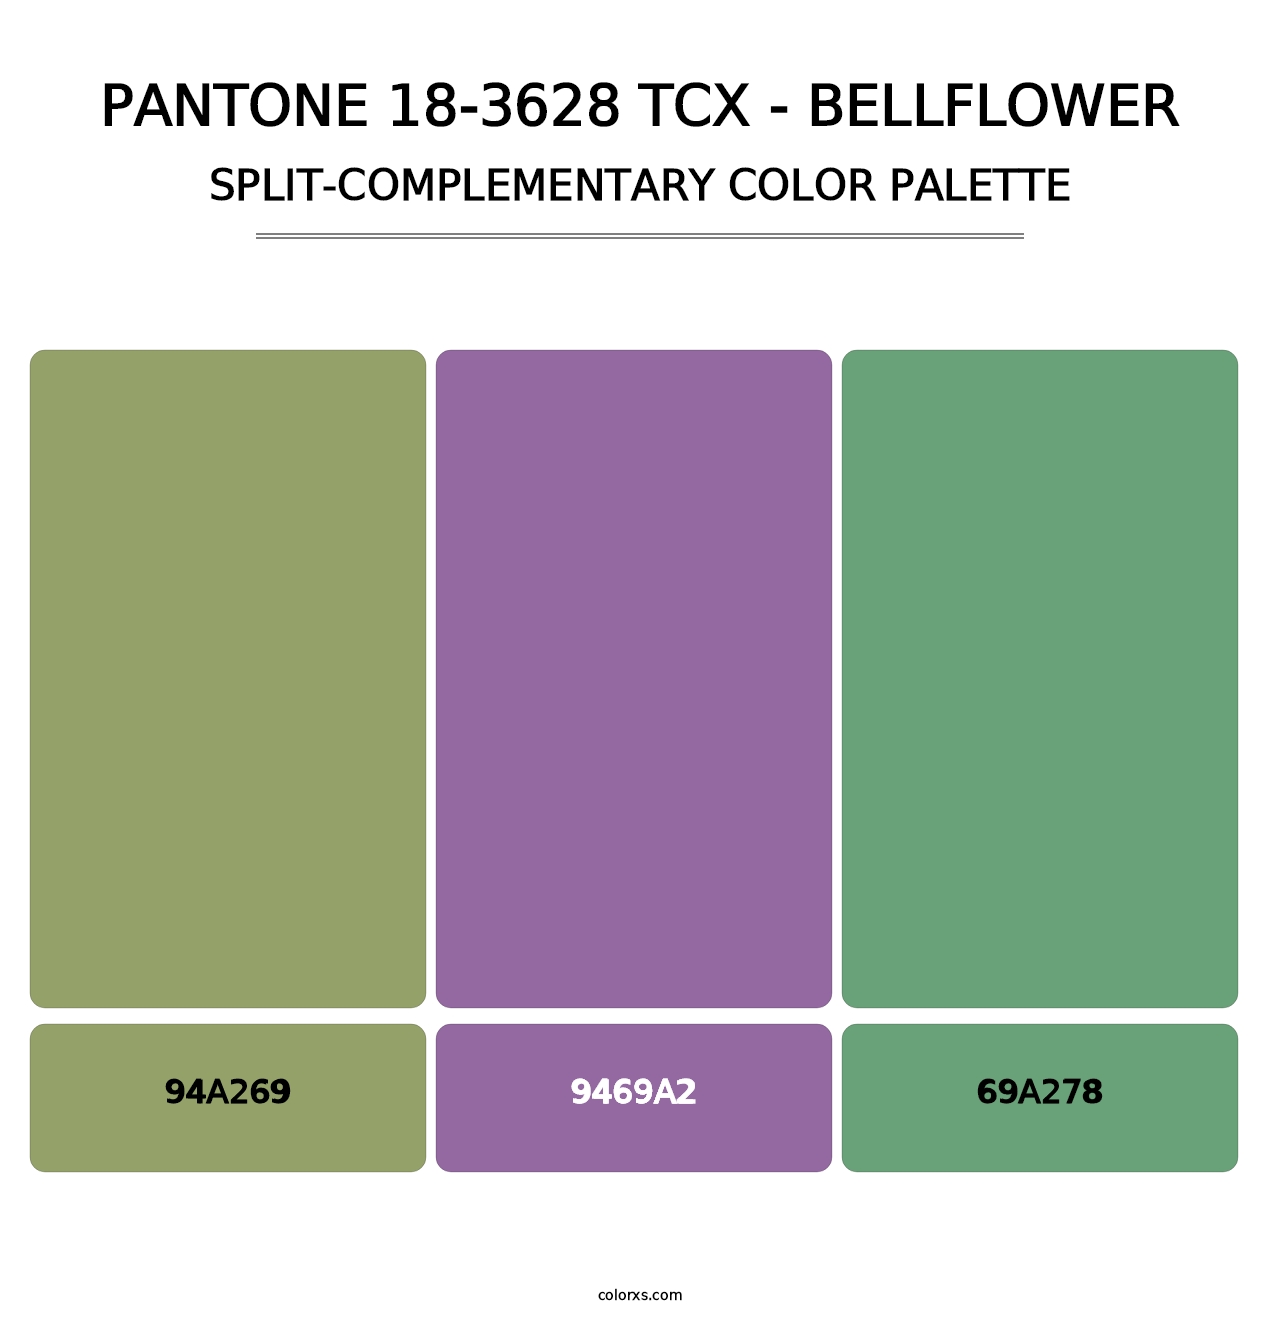 PANTONE 18-3628 TCX - Bellflower - Split-Complementary Color Palette